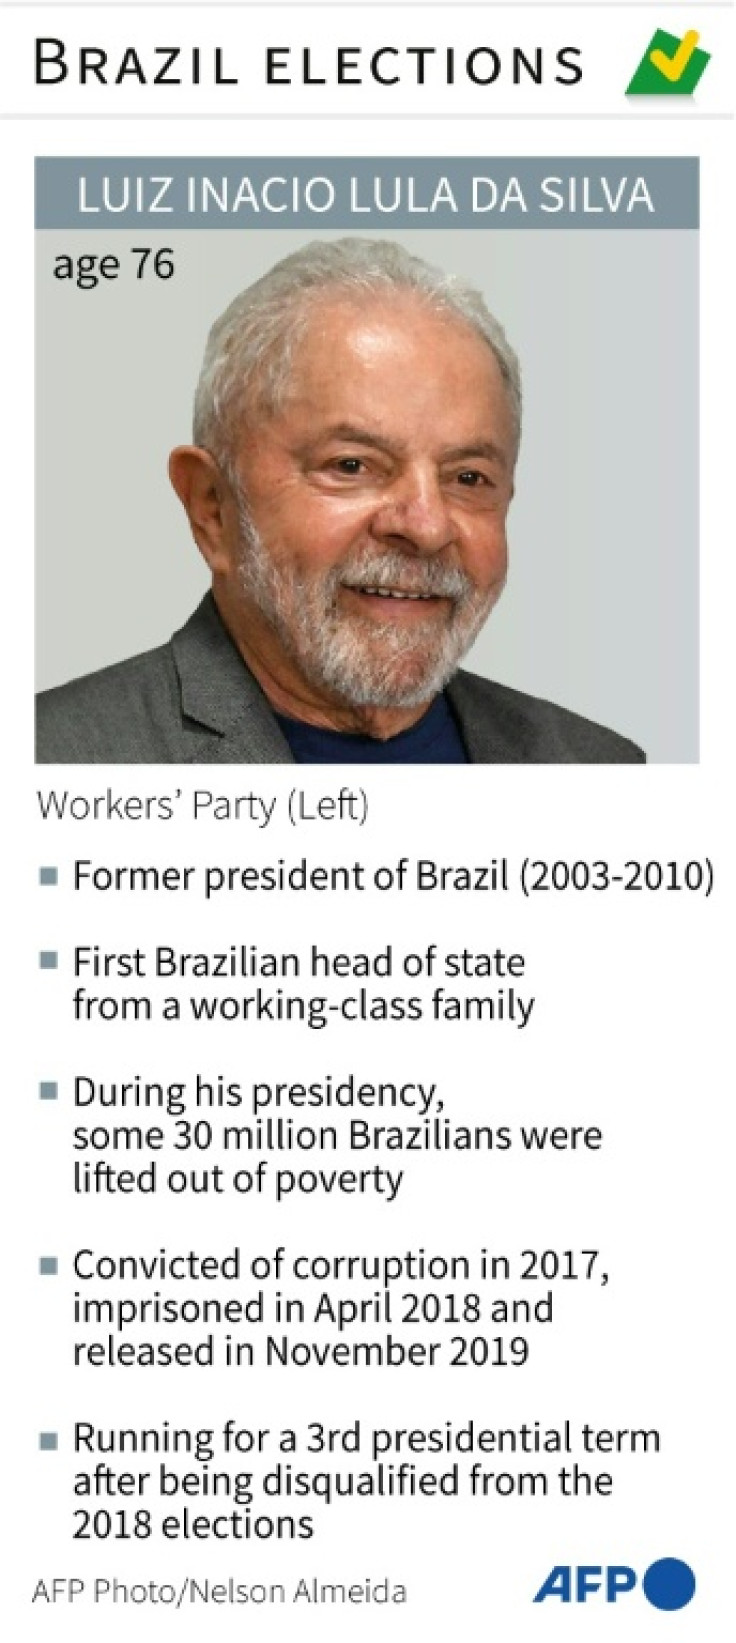 Profile of Brazil's former president Luiz Inacio Lula da Silva